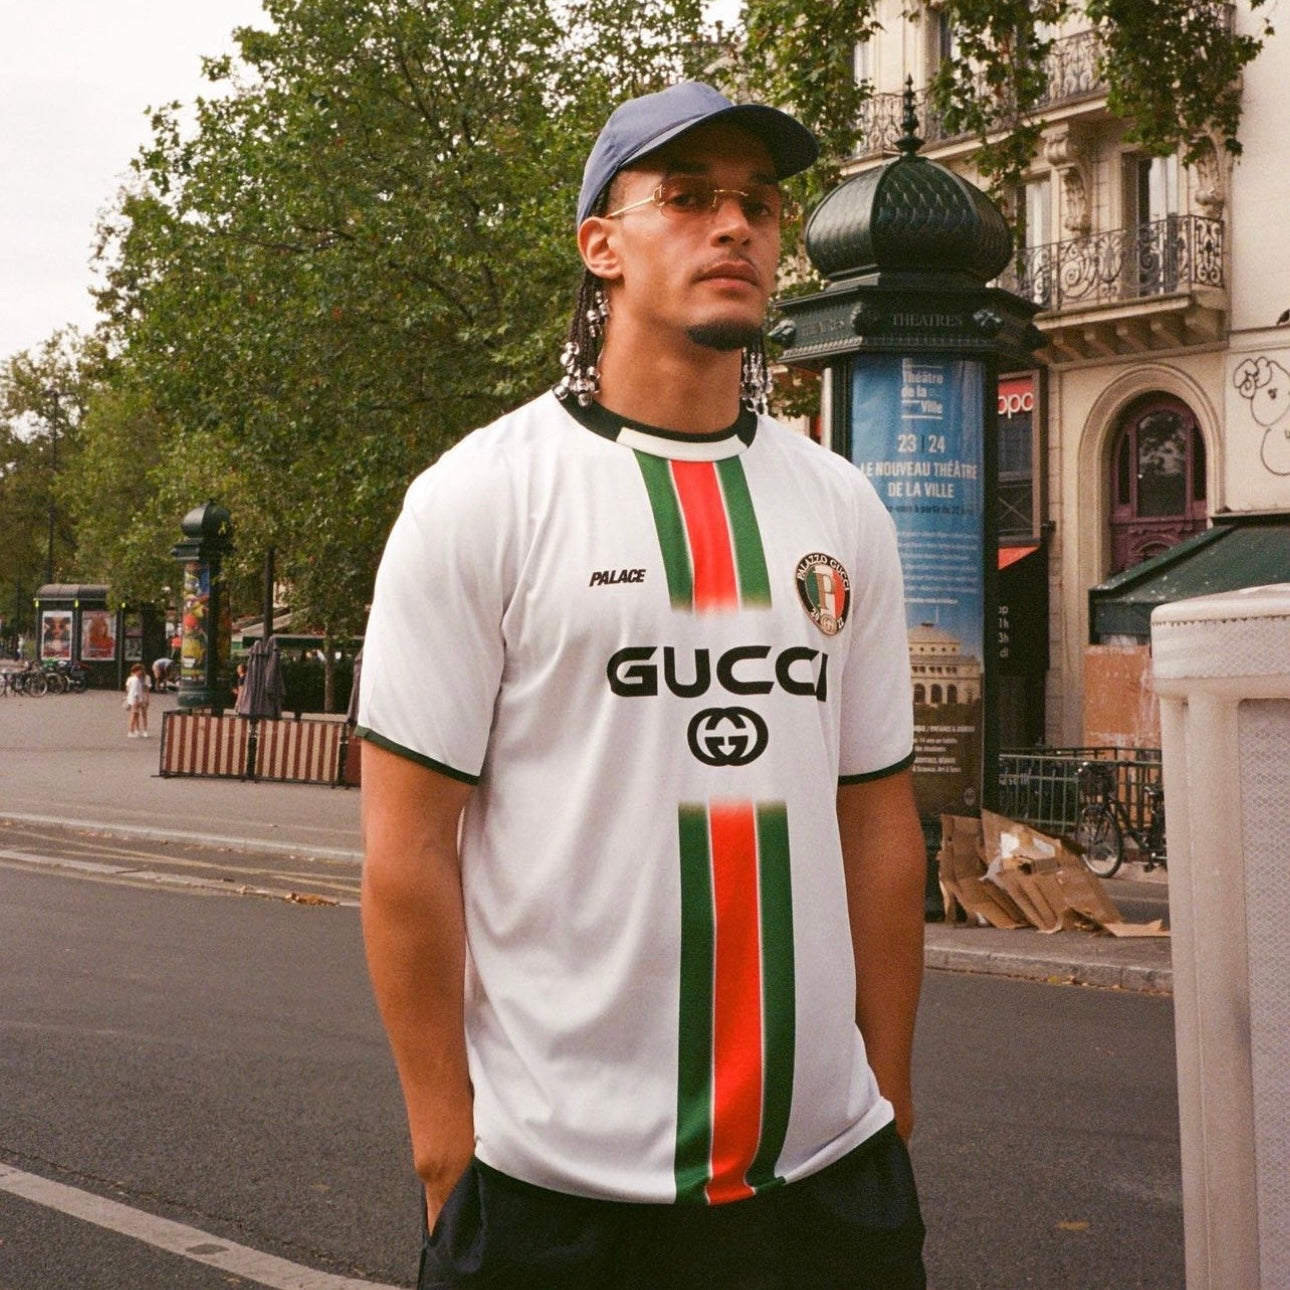 Palace x Gucci Printed Football Technical Jersey T-Shirt